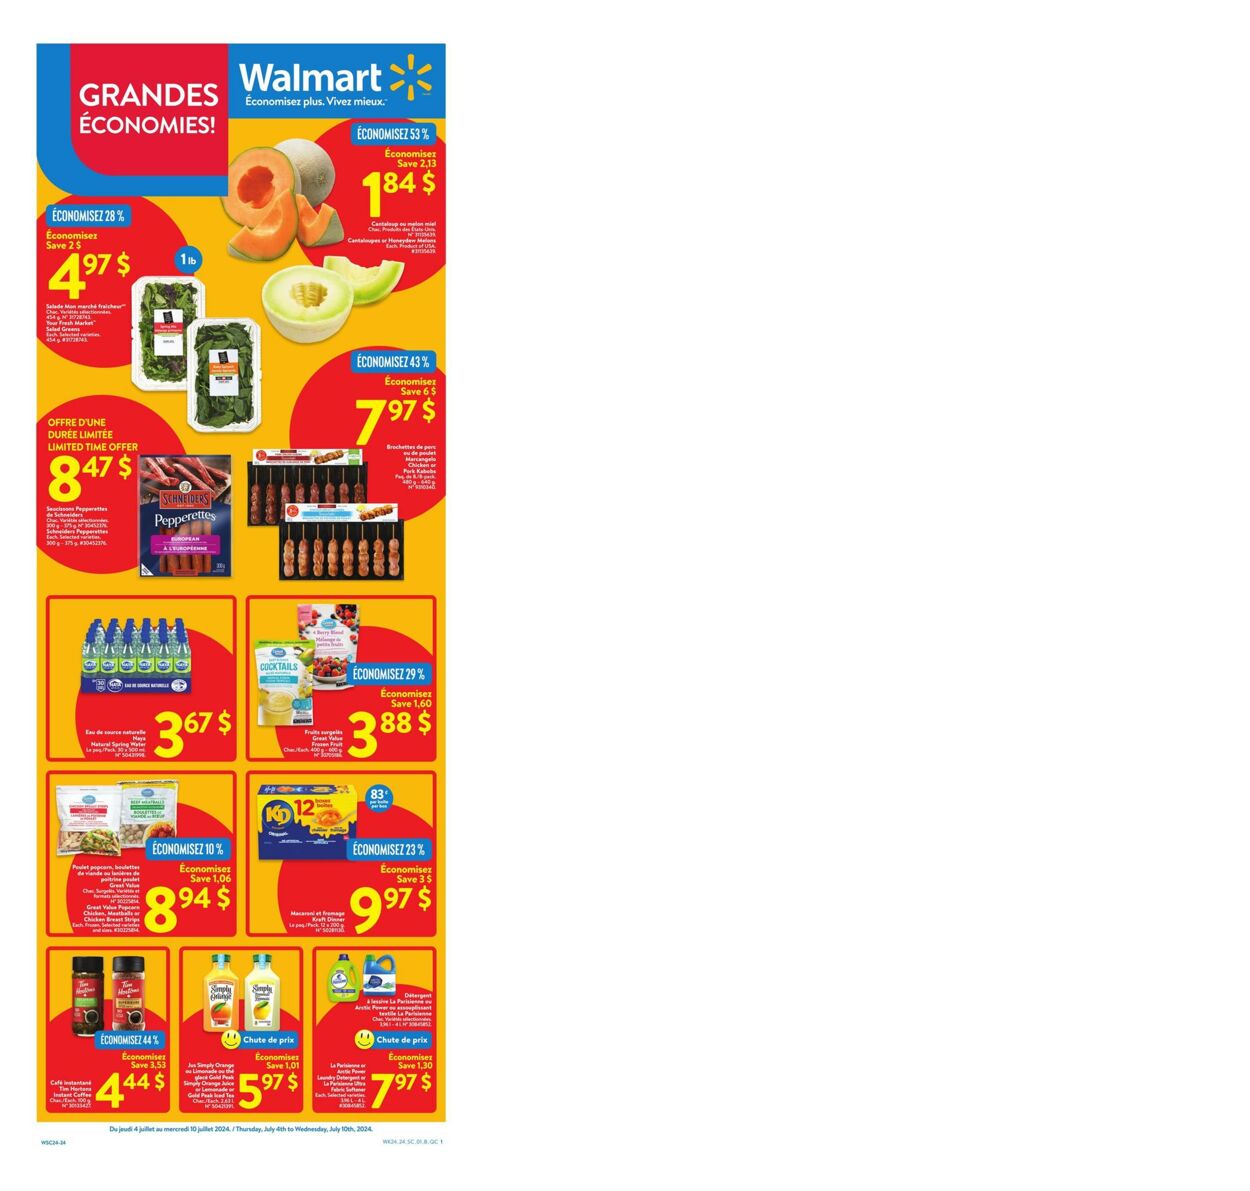 Walmart Promotional flyers